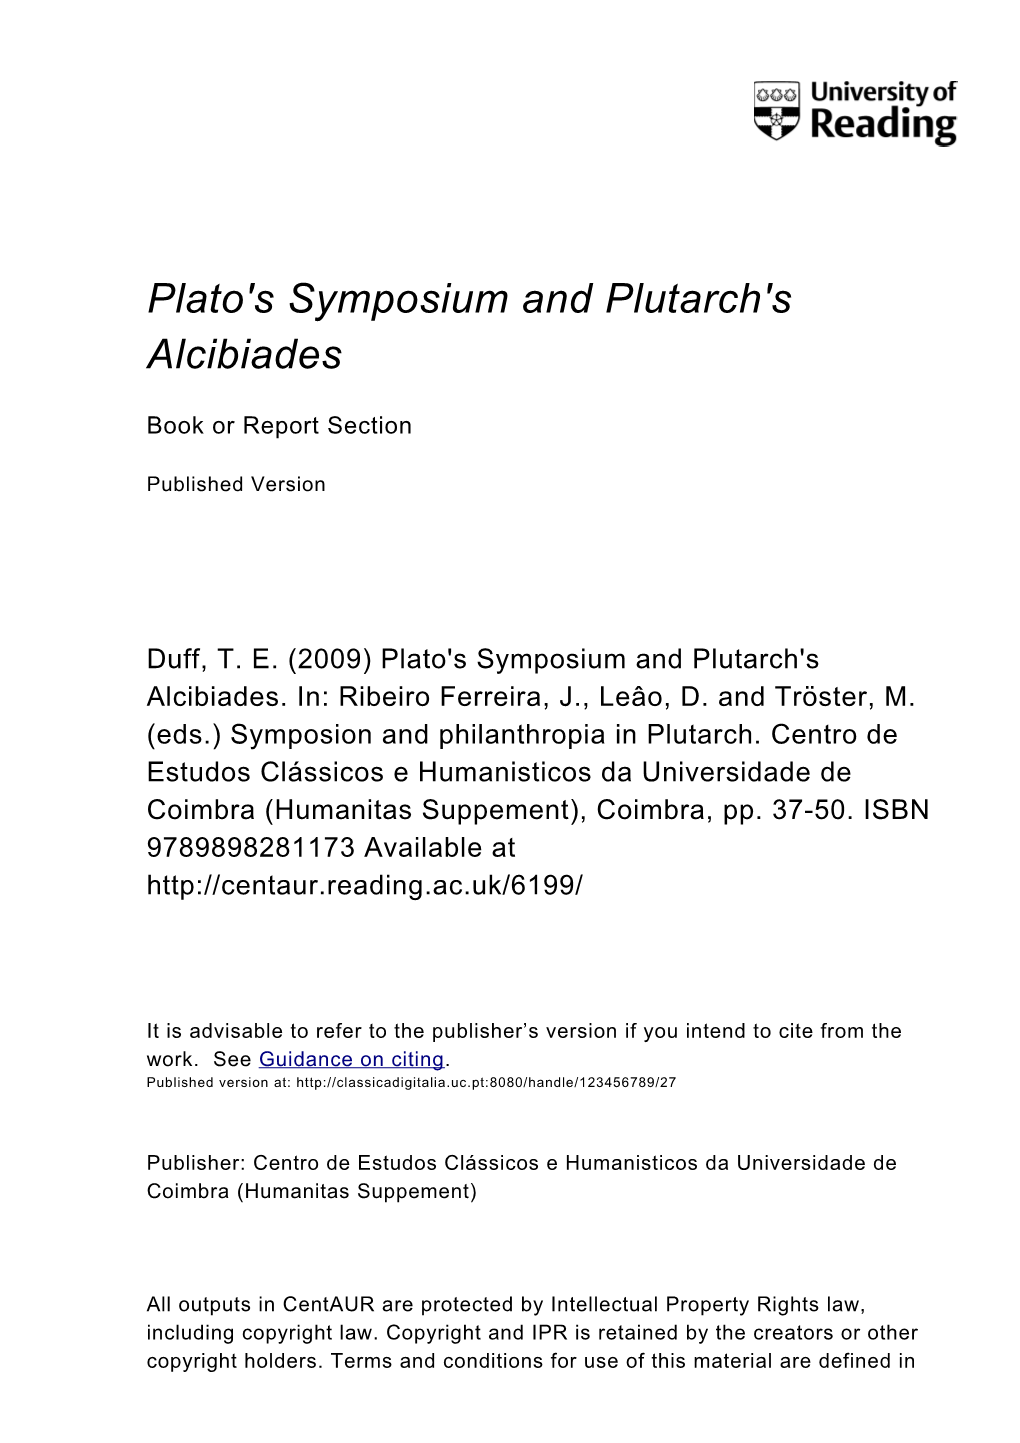 Plato's Symposium and Plutarch's Alcibiades